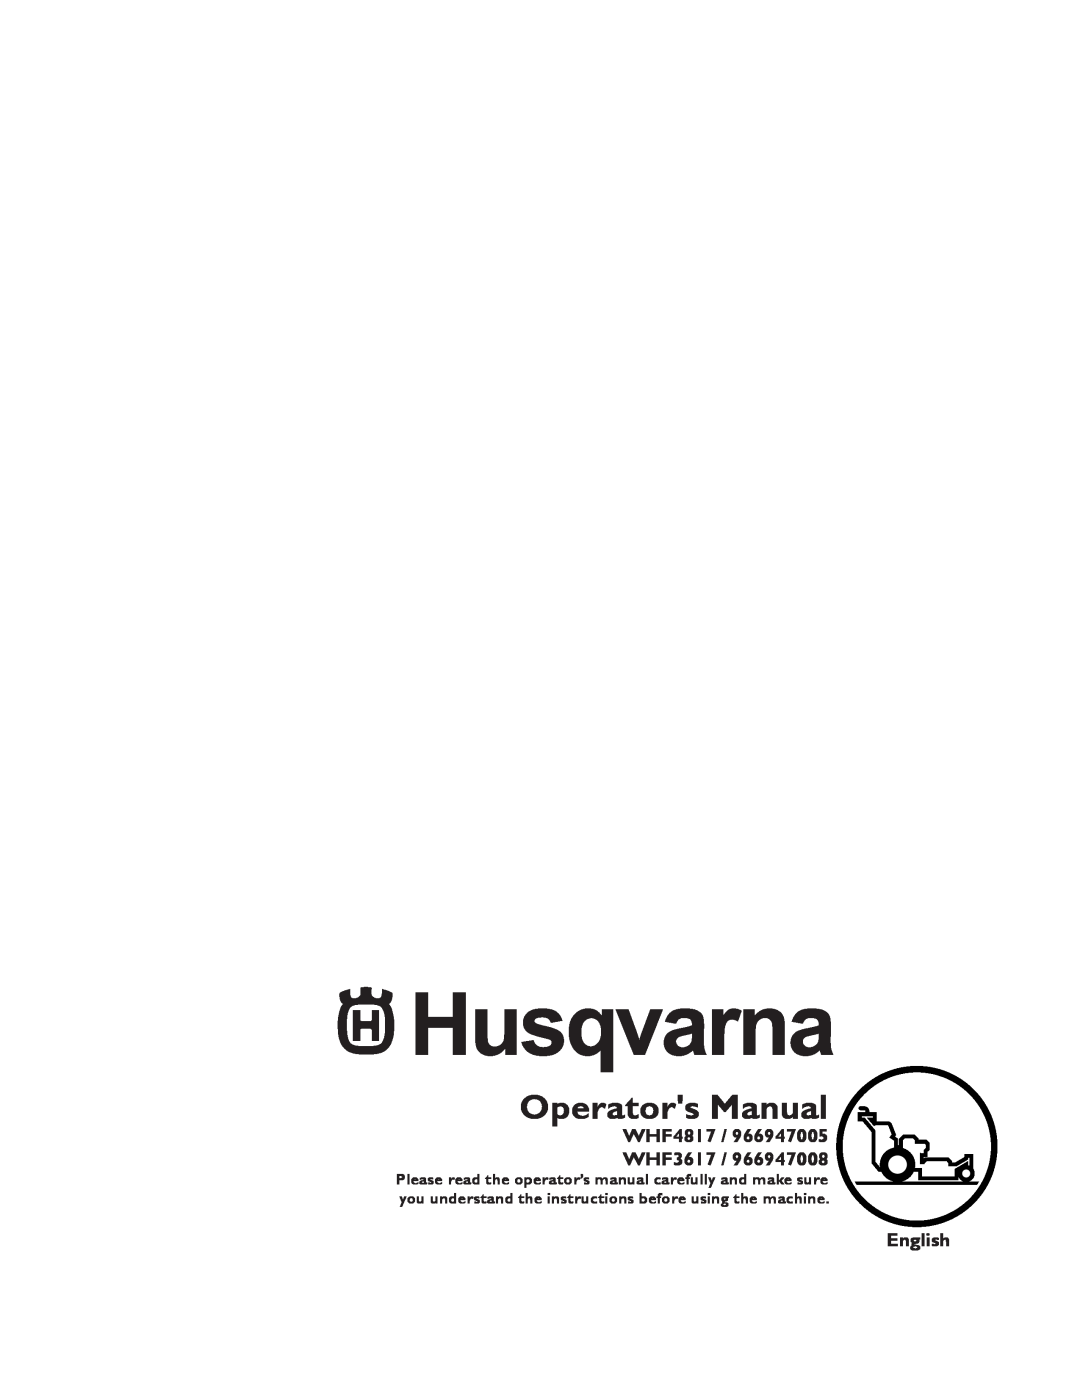 Husqvarna 966947005, 966947008 manual Operators Manual, WHF4817 / WHF3617, English 